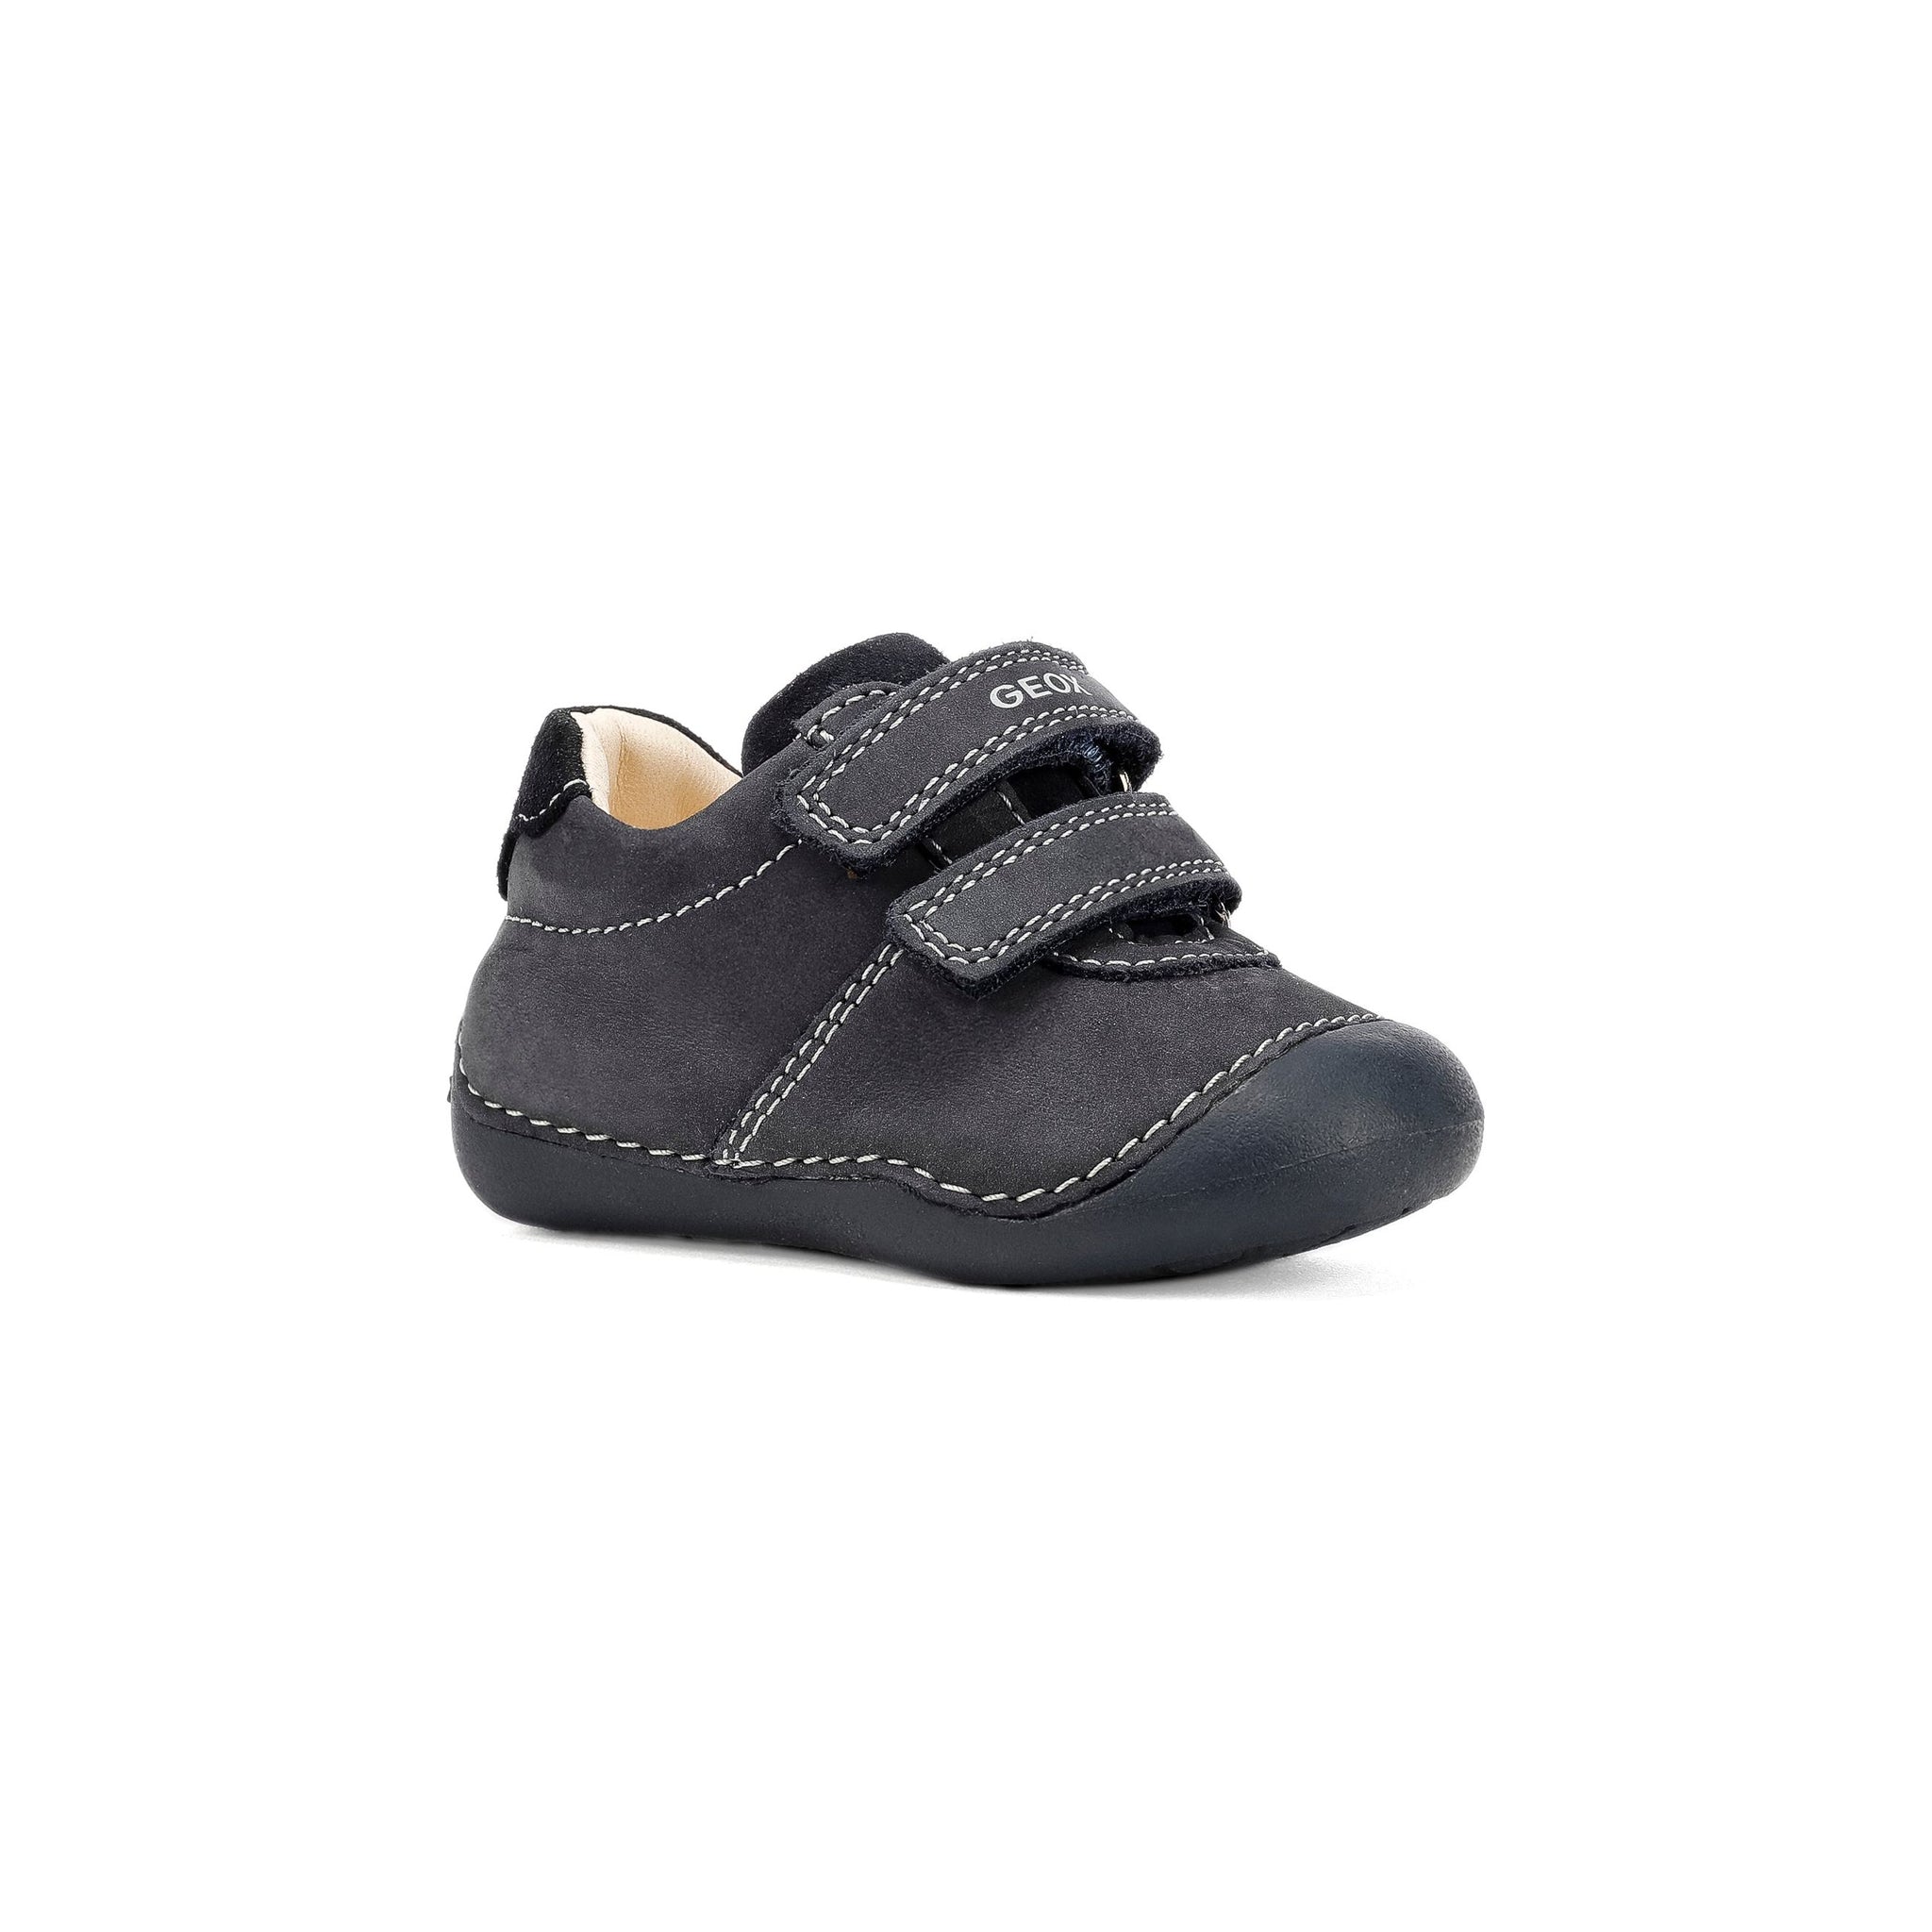 Geox Tutim(B9439A) - Boys Velcro Pre-Walker in Navy | Geox Shoes | Childrens Shoe Fitting | Wisemans | Bantry | West Cork | Ireland